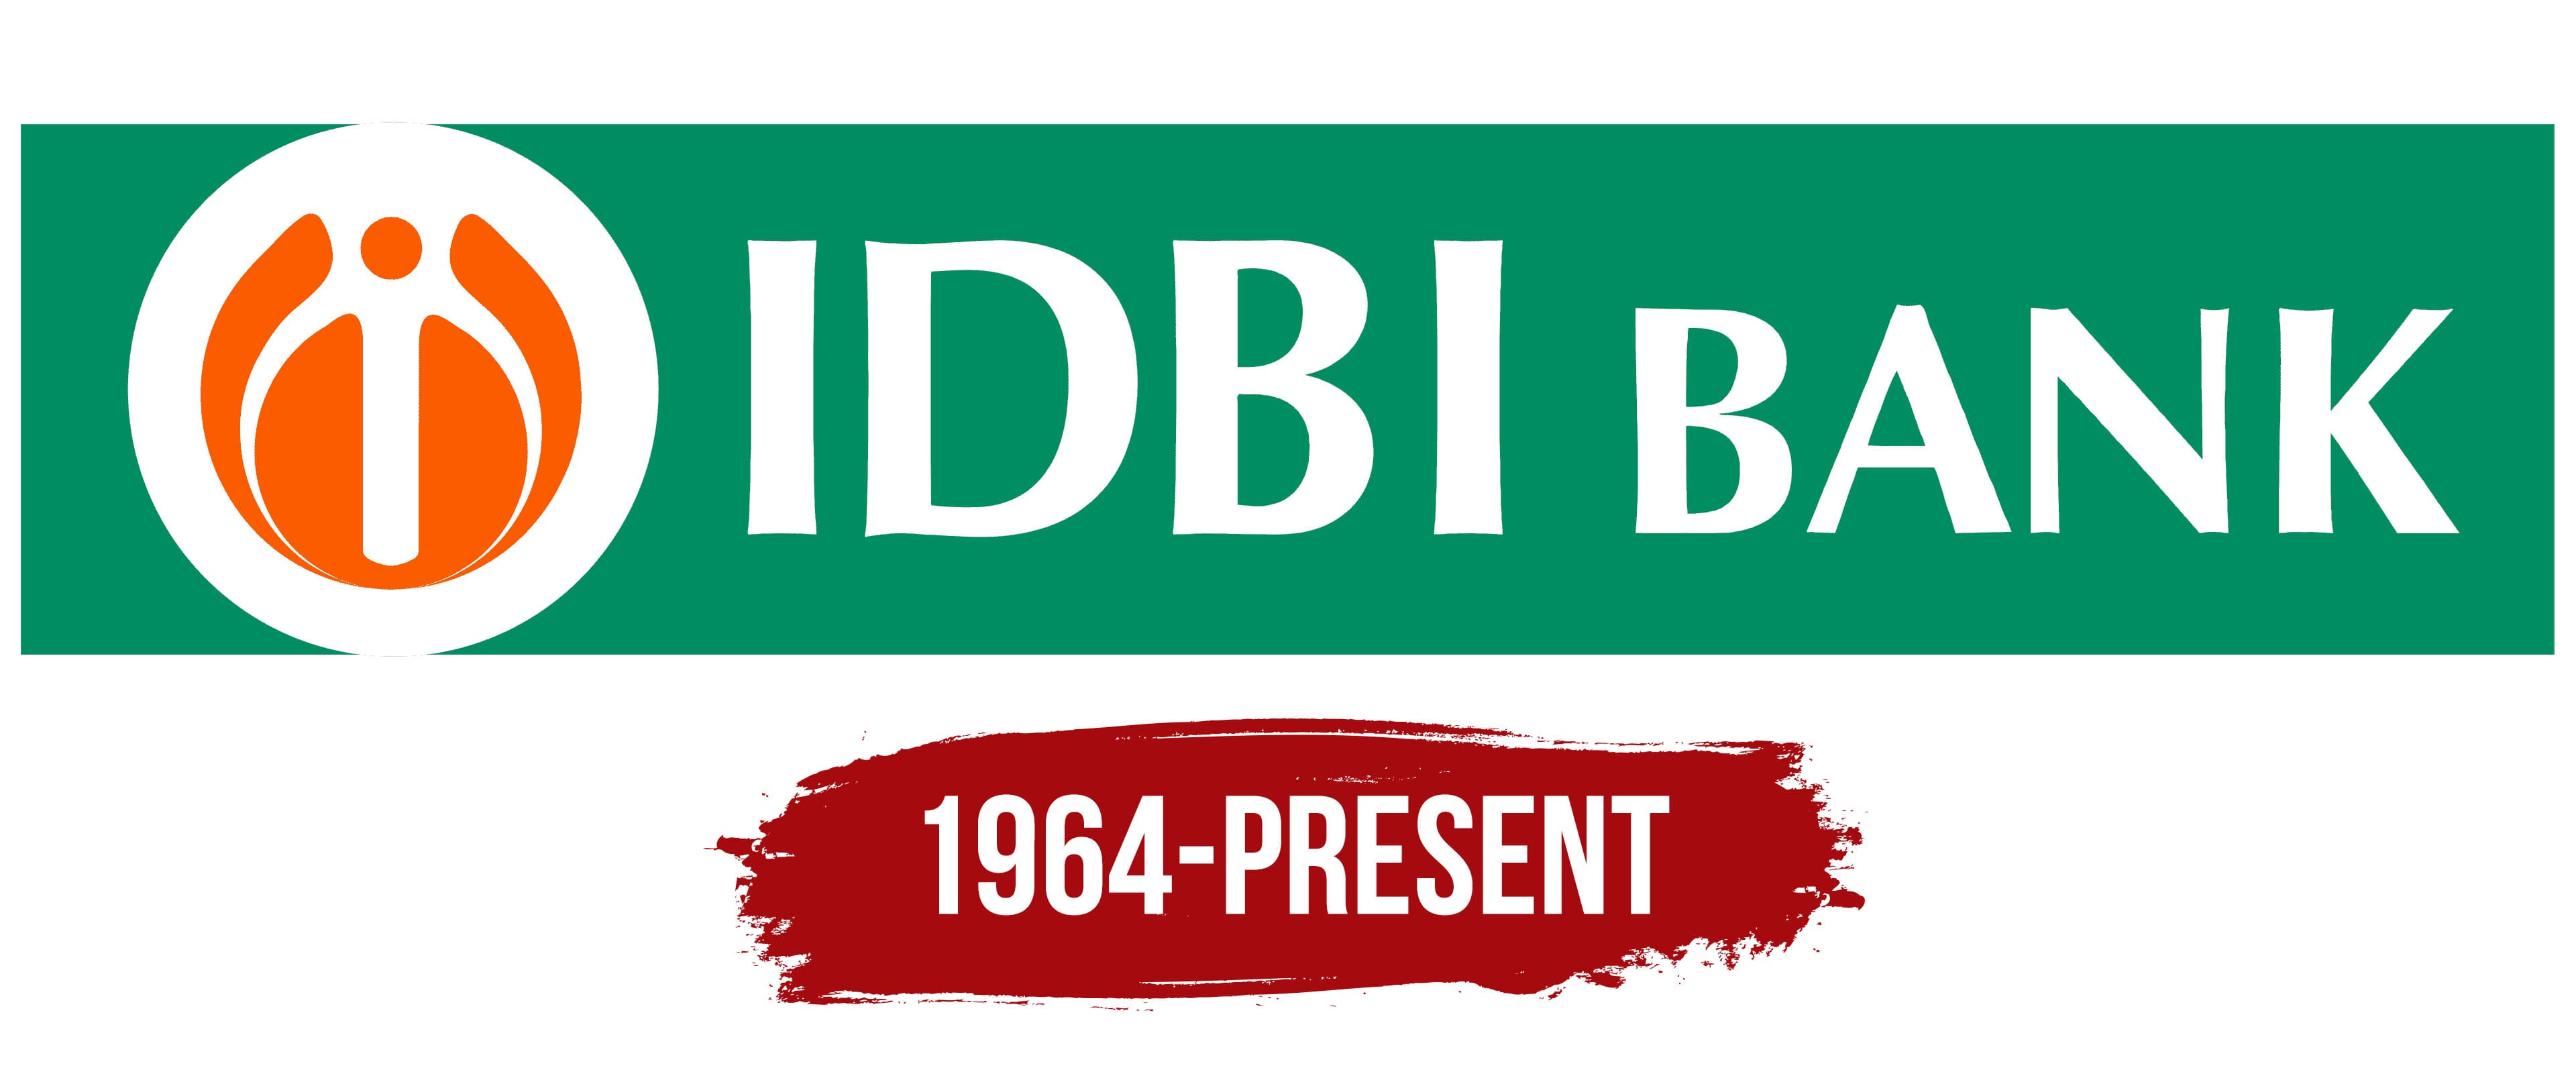 idbi bank logo, symbol, meaning, history, png, brand